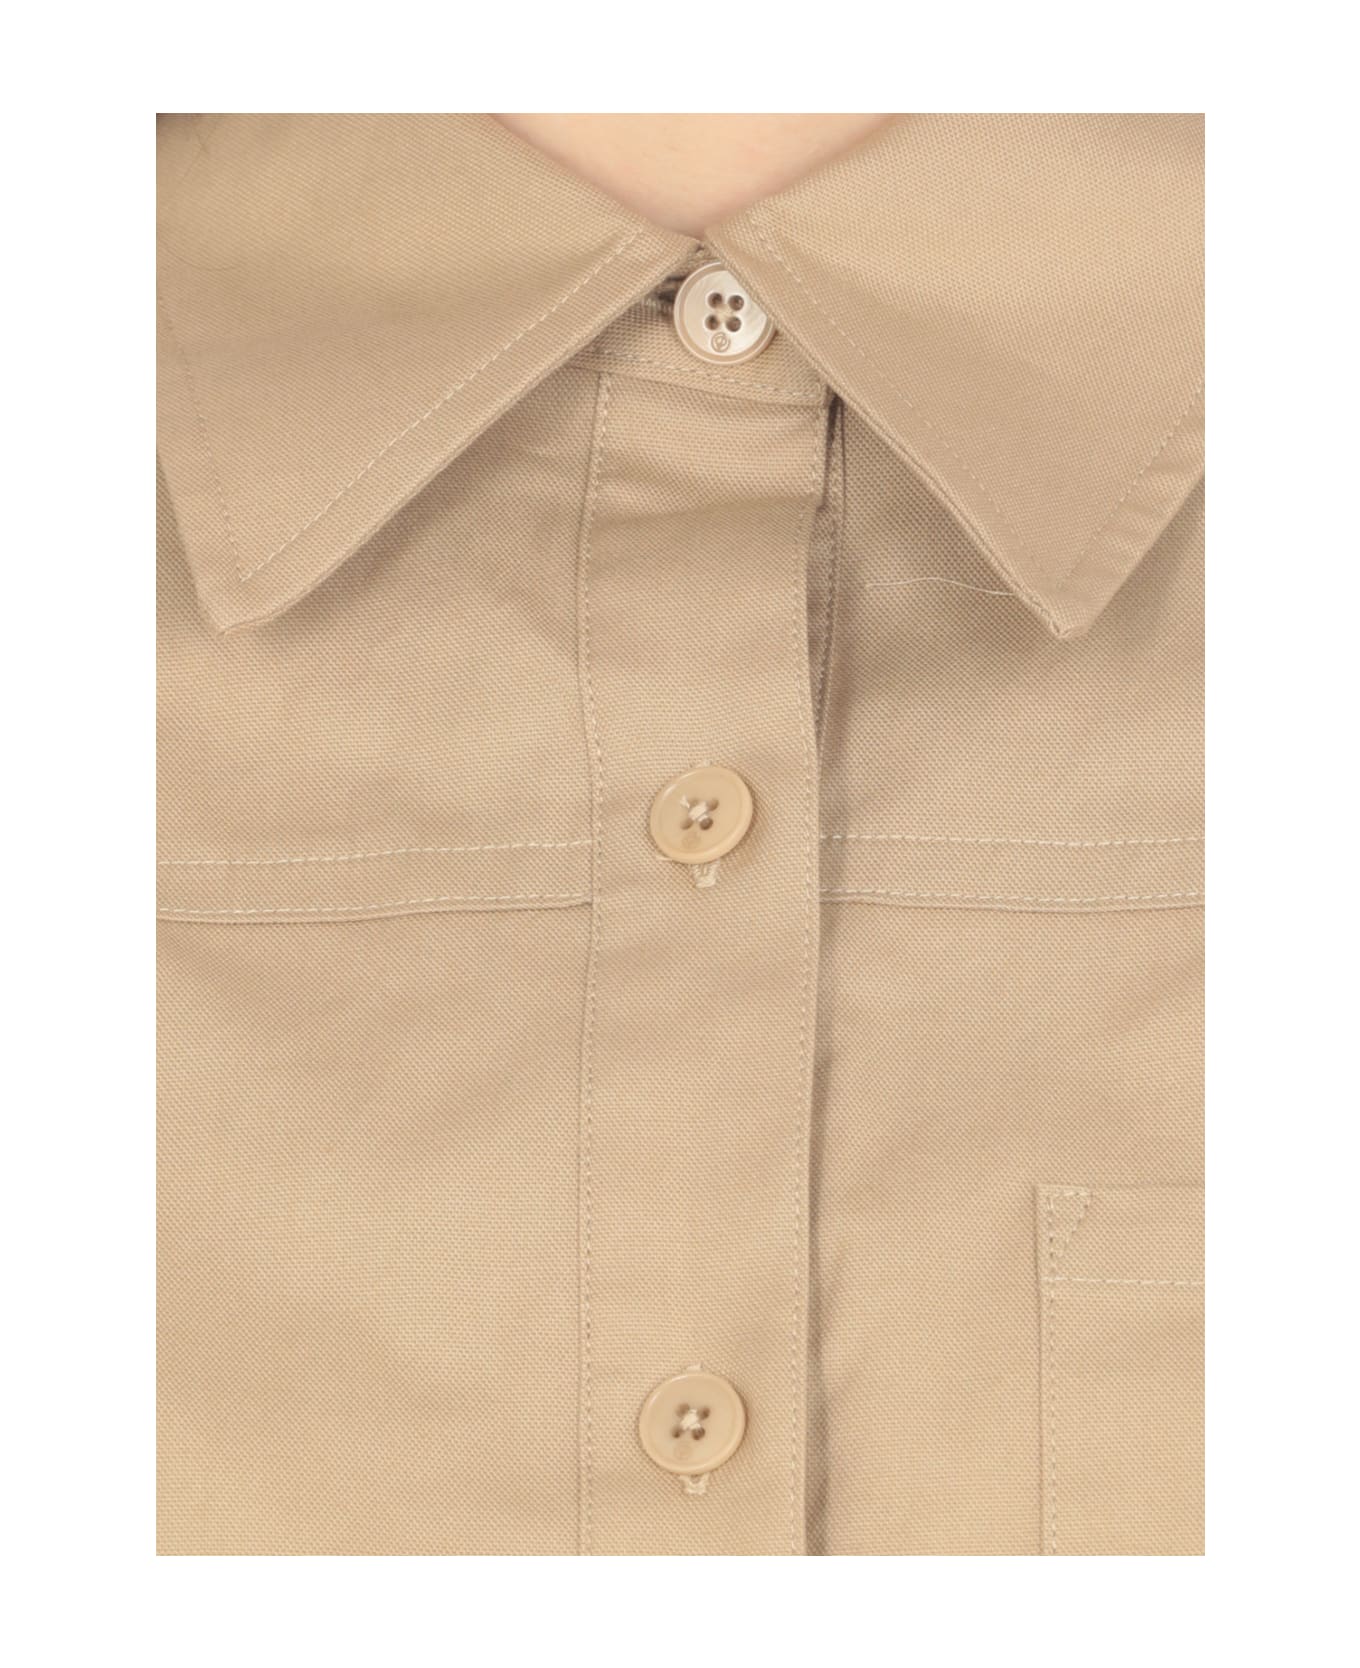 3.1 Phillip Lim Slv Cropped Shirt - Beige シャツ